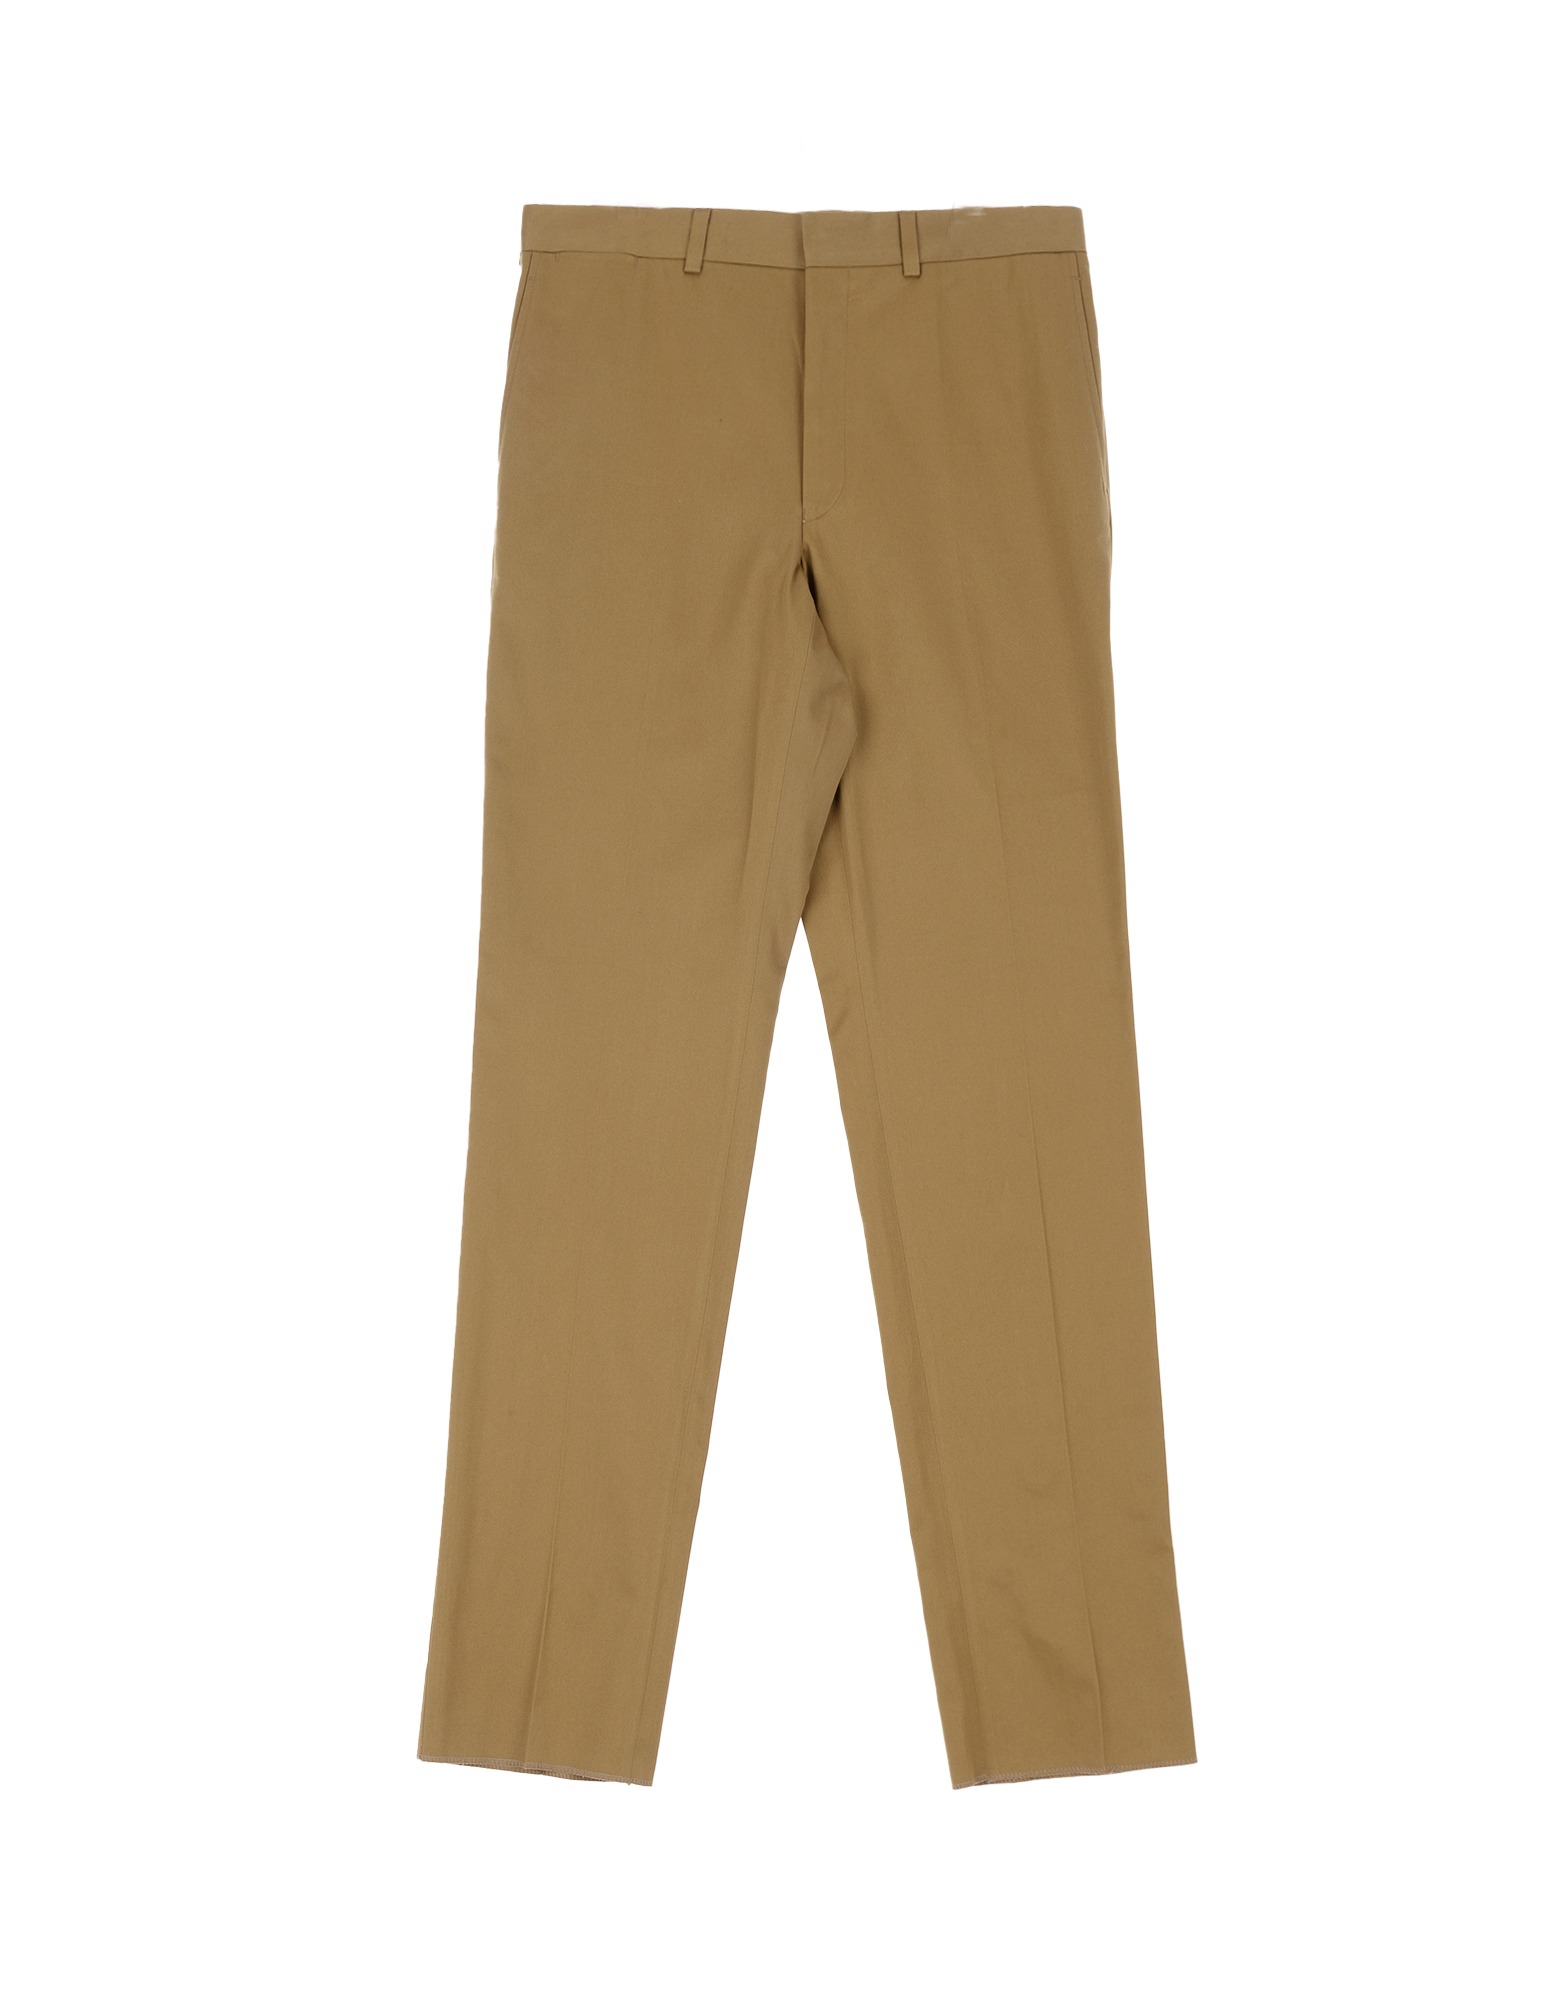 Cotton Drill Cloth Trousers (Dark Khaki)